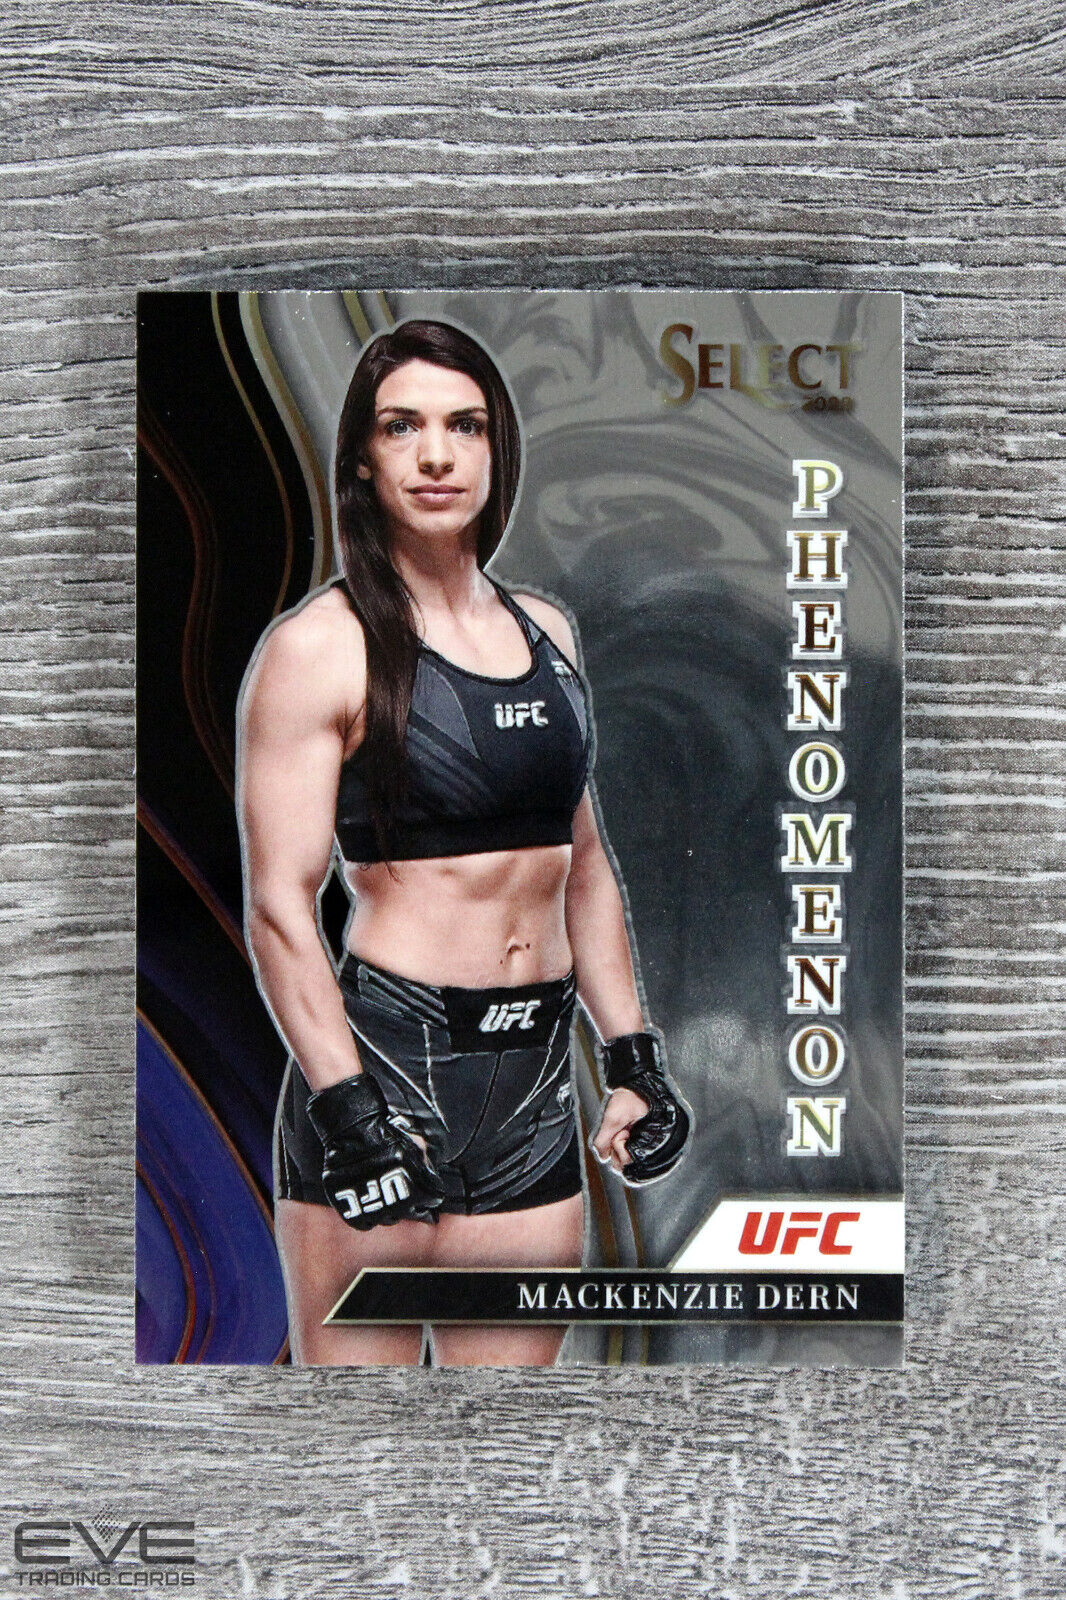 2022 Panini Select UFC "Phenomenon" Base Card #26 Mackenzie Dern - NM/M